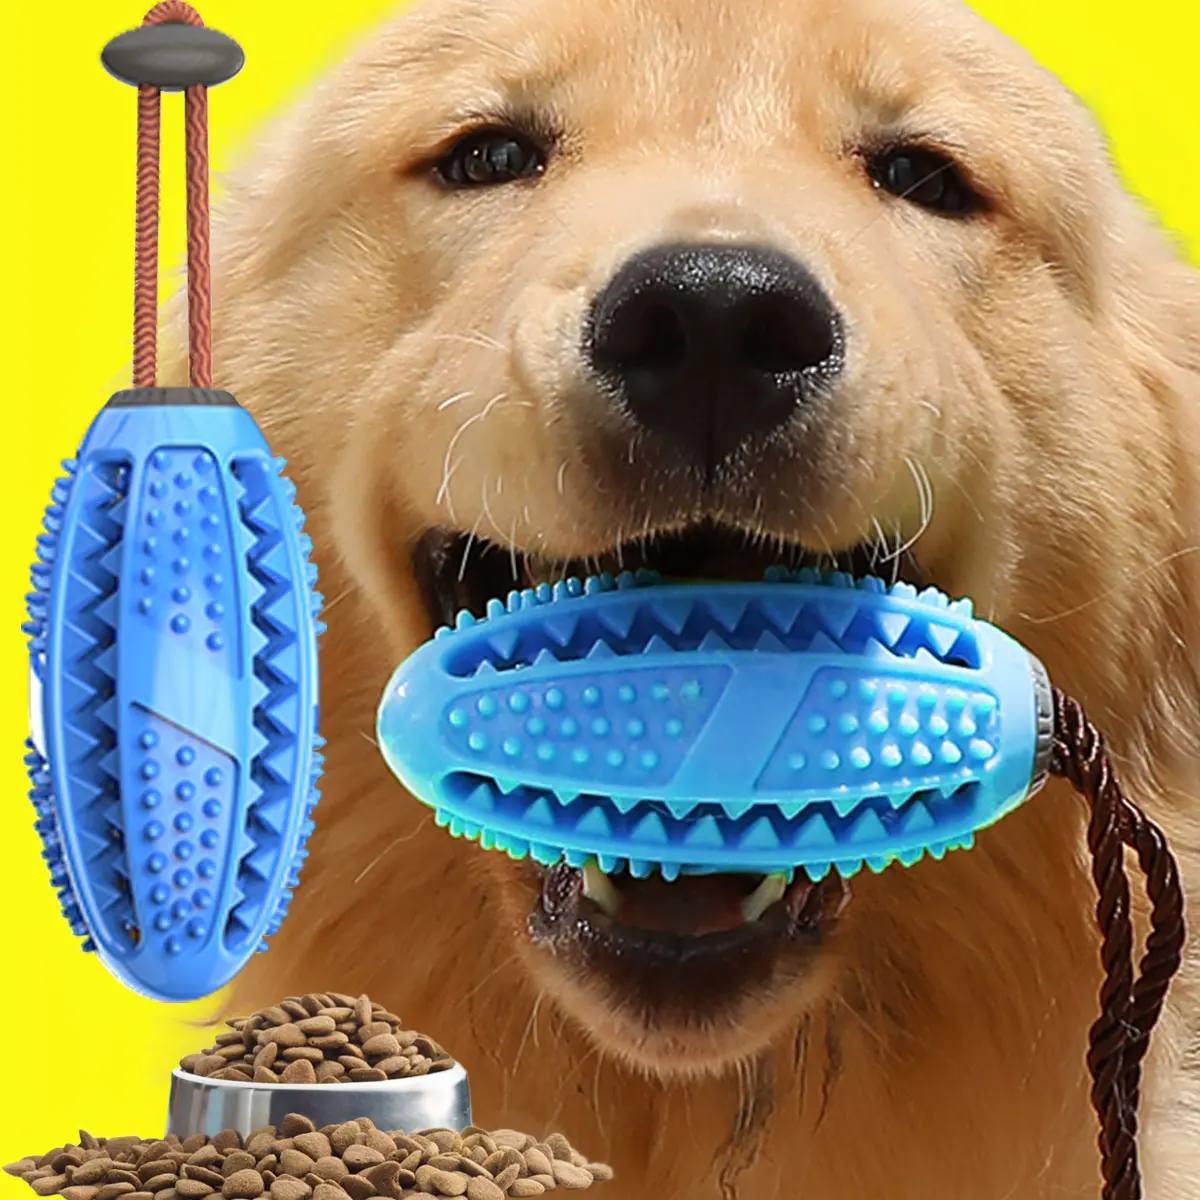 https://ae01.alicdn.com/kf/S794c45a7700d44dcb570c3e15d70eca1g/Popular-Rubber-Kong-Dog-Toy-for-French-Bulldog-Dog-Teeth-Brush-Dog-Chew-Ball-Interactive-Pet.jpg